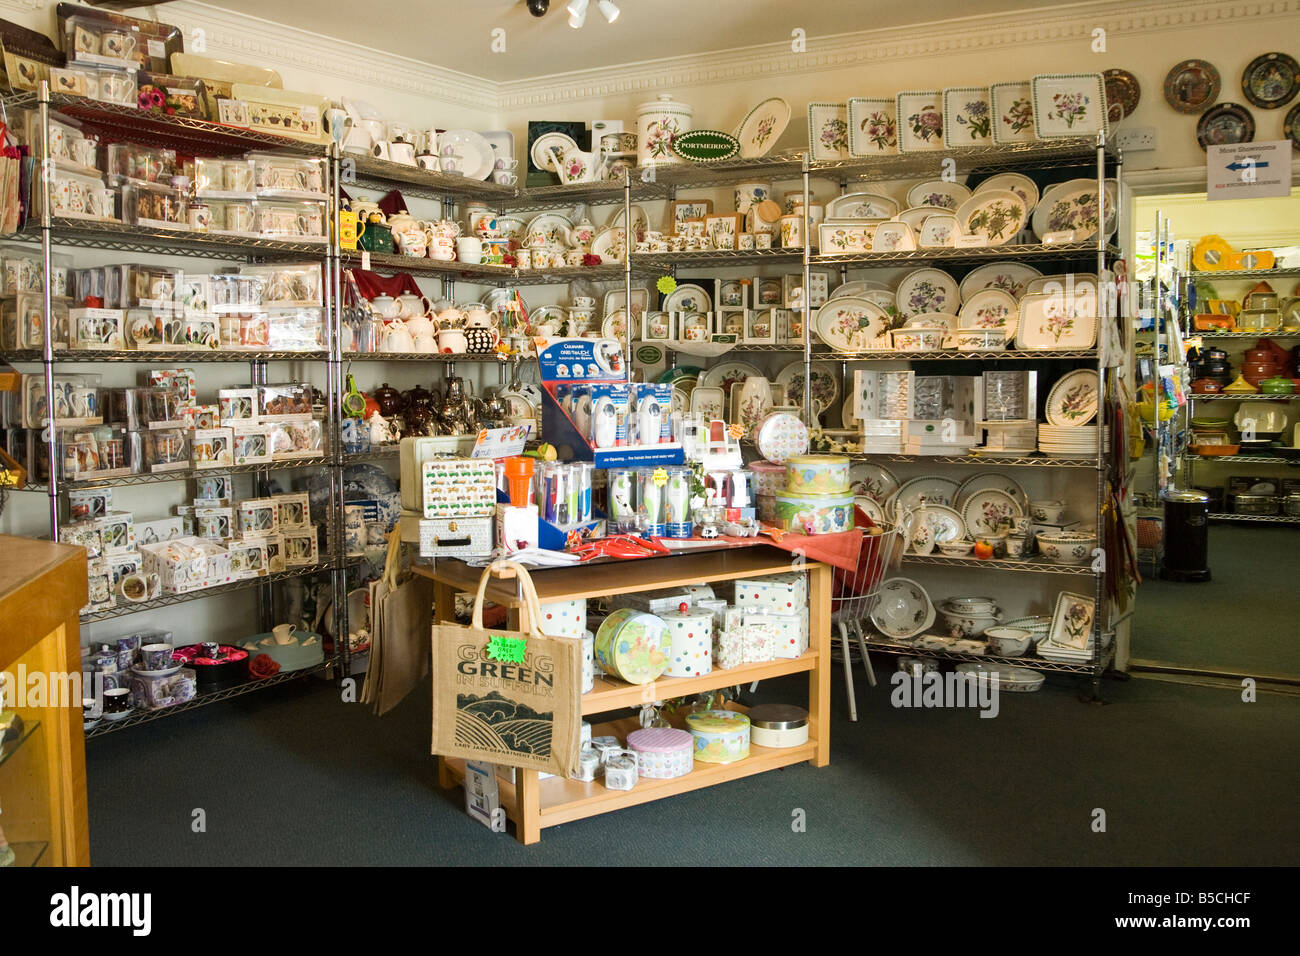 im shop "Lady Jane" in Long Melford, Suffolk, UK Stockfoto